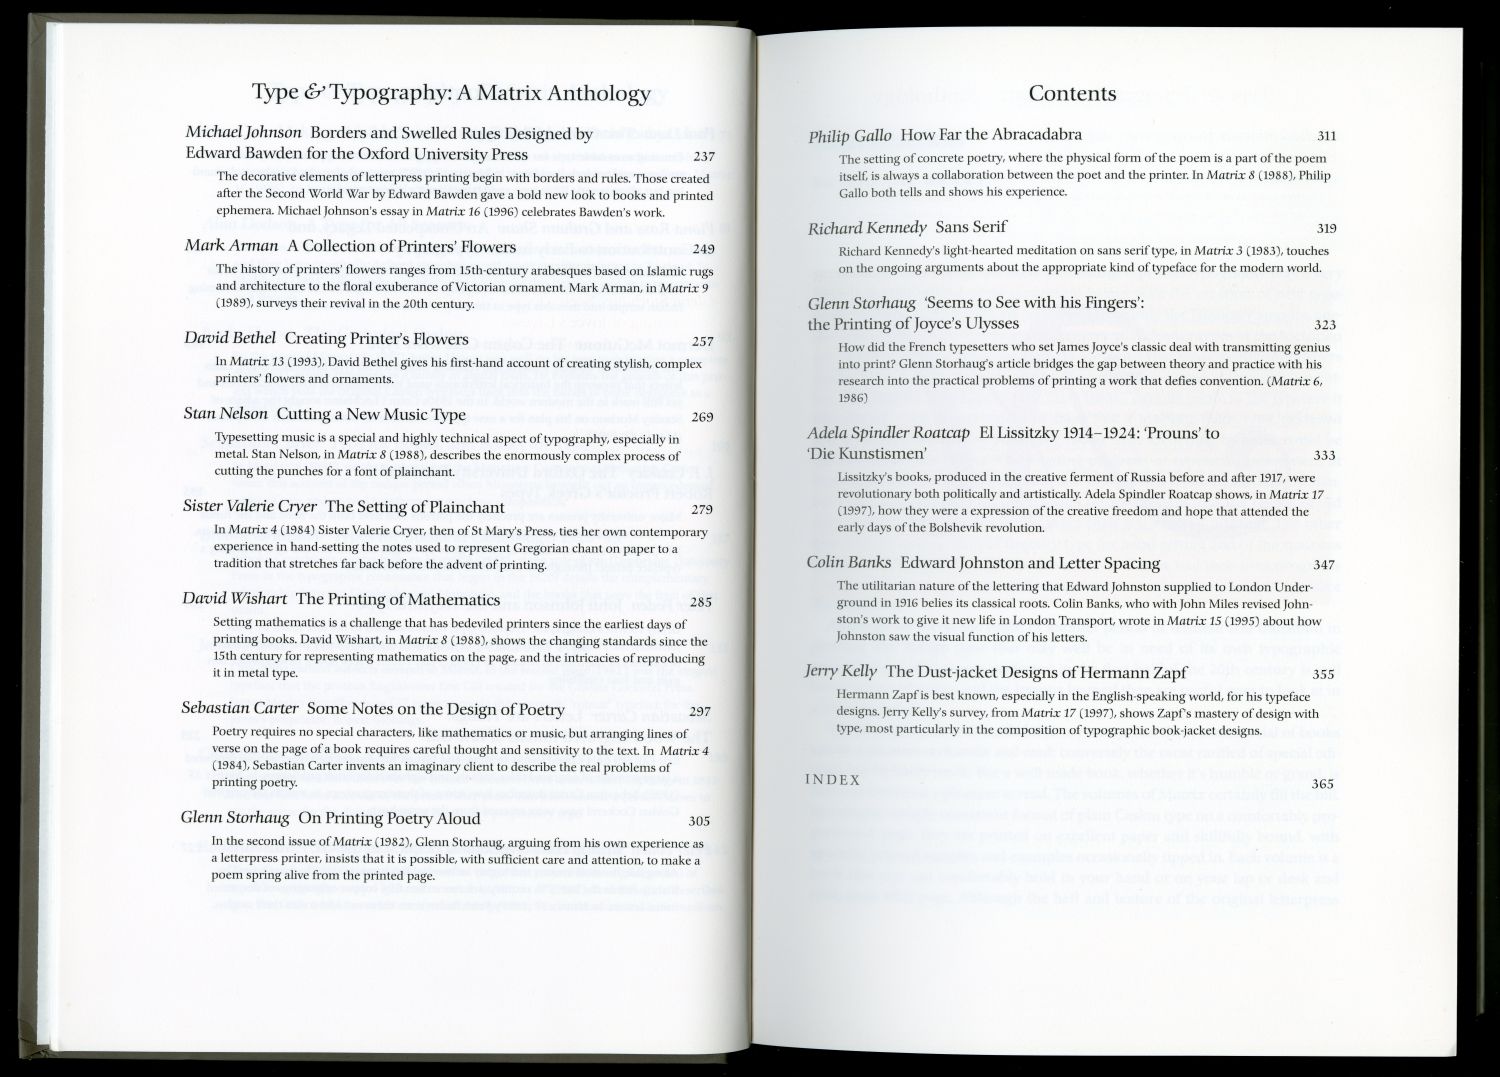 『Type & Typography』（2003年、Mark Batty Publisher）刊記と目次03